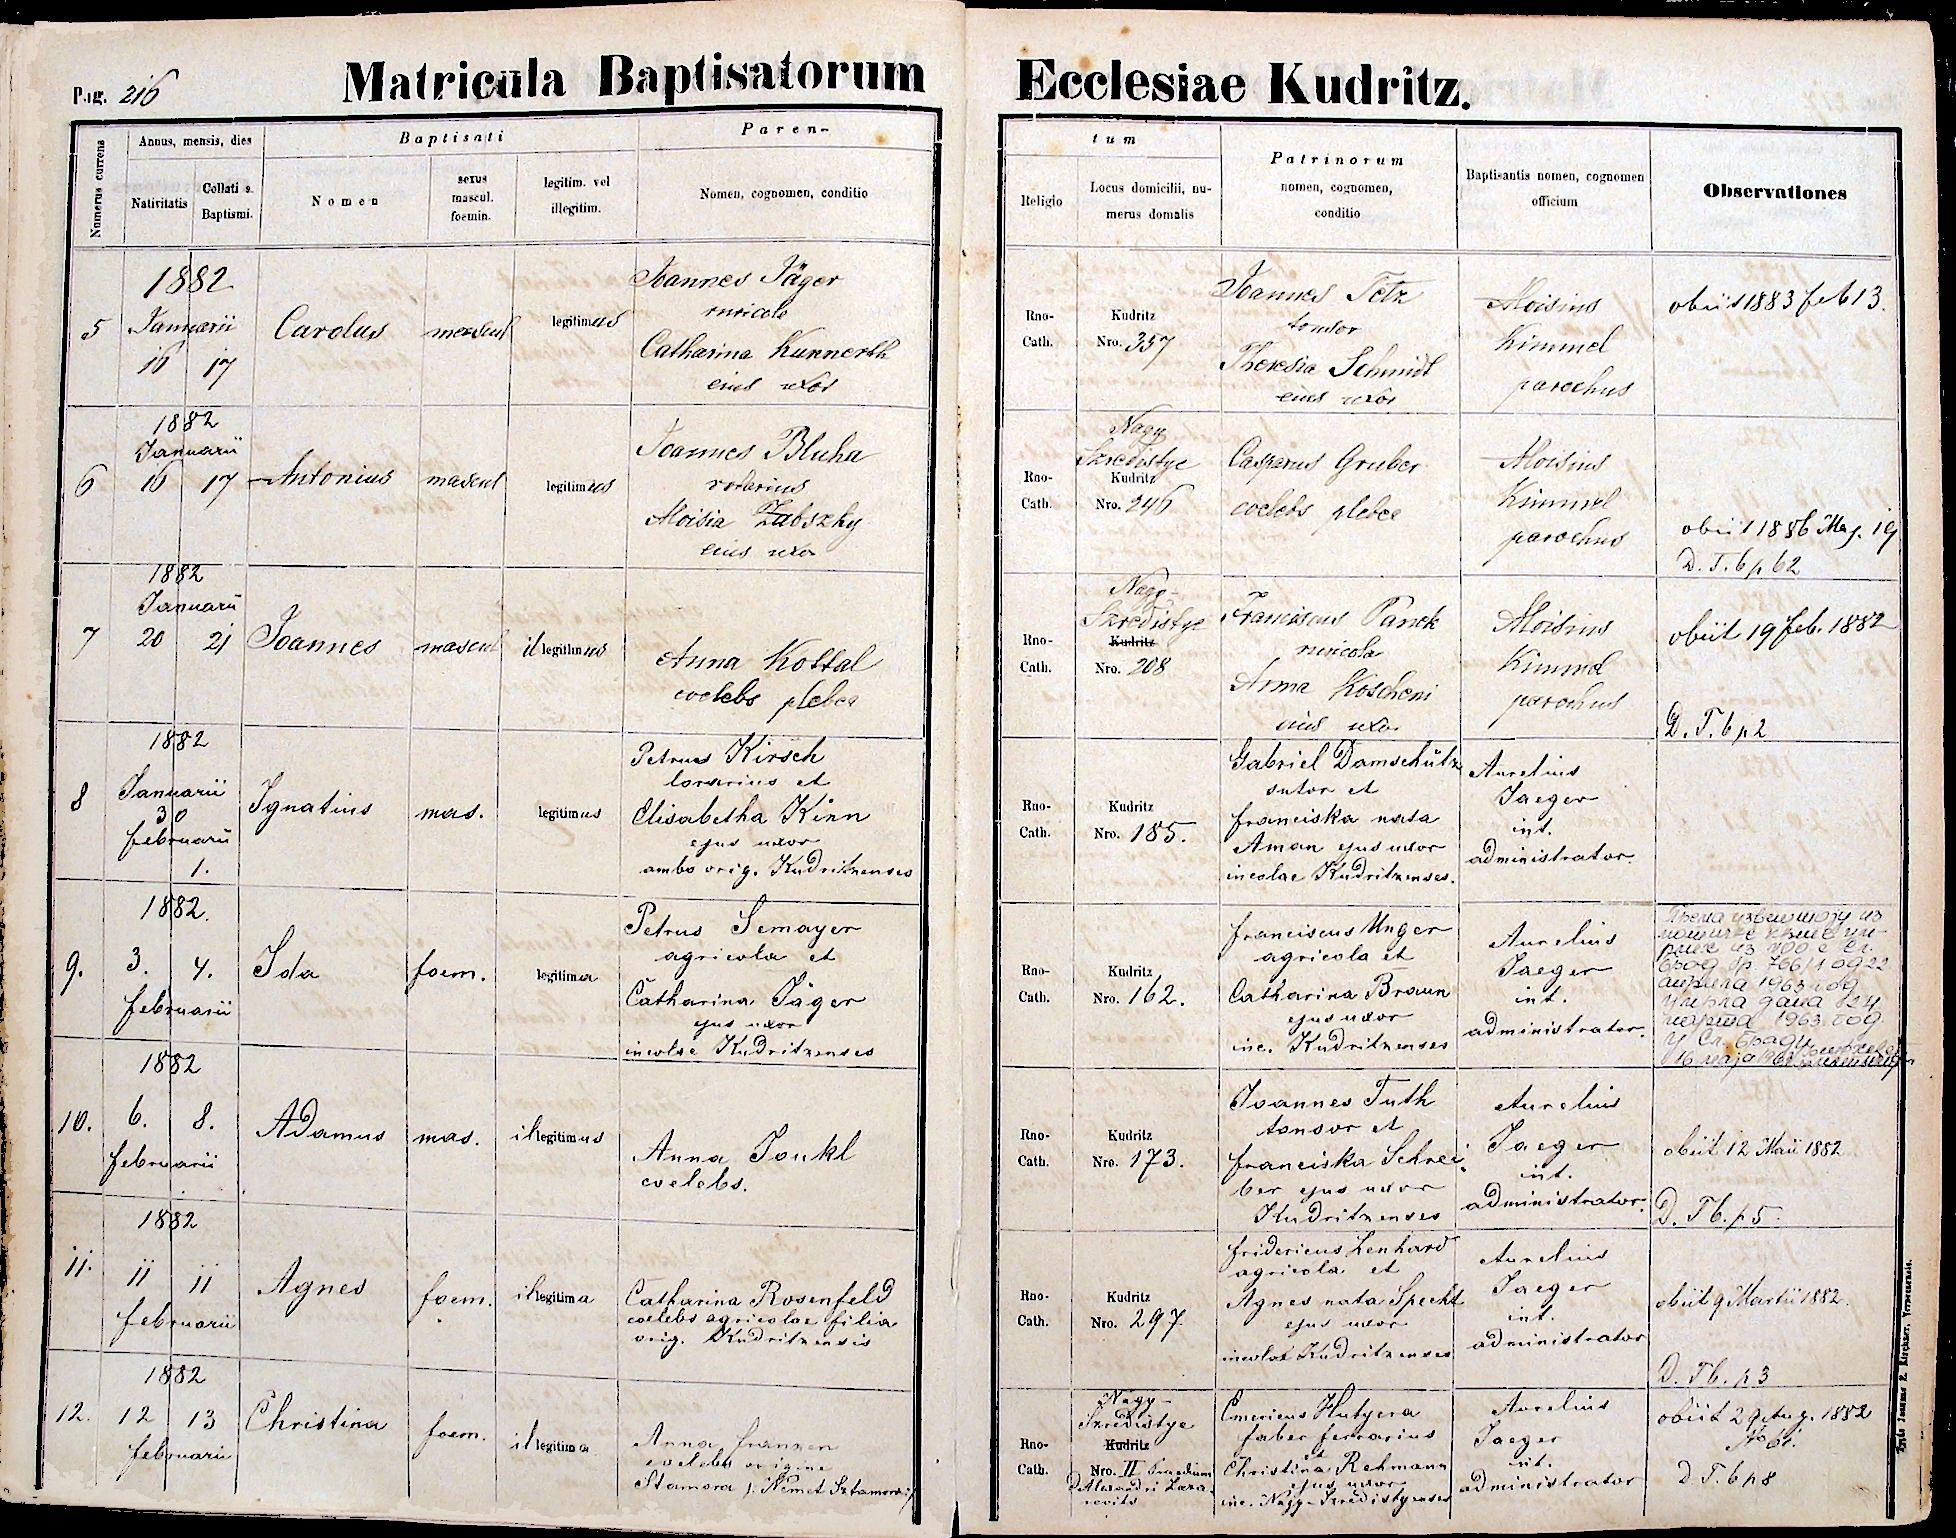 images/church_records/BIRTHS/1884-1899B/1899/216